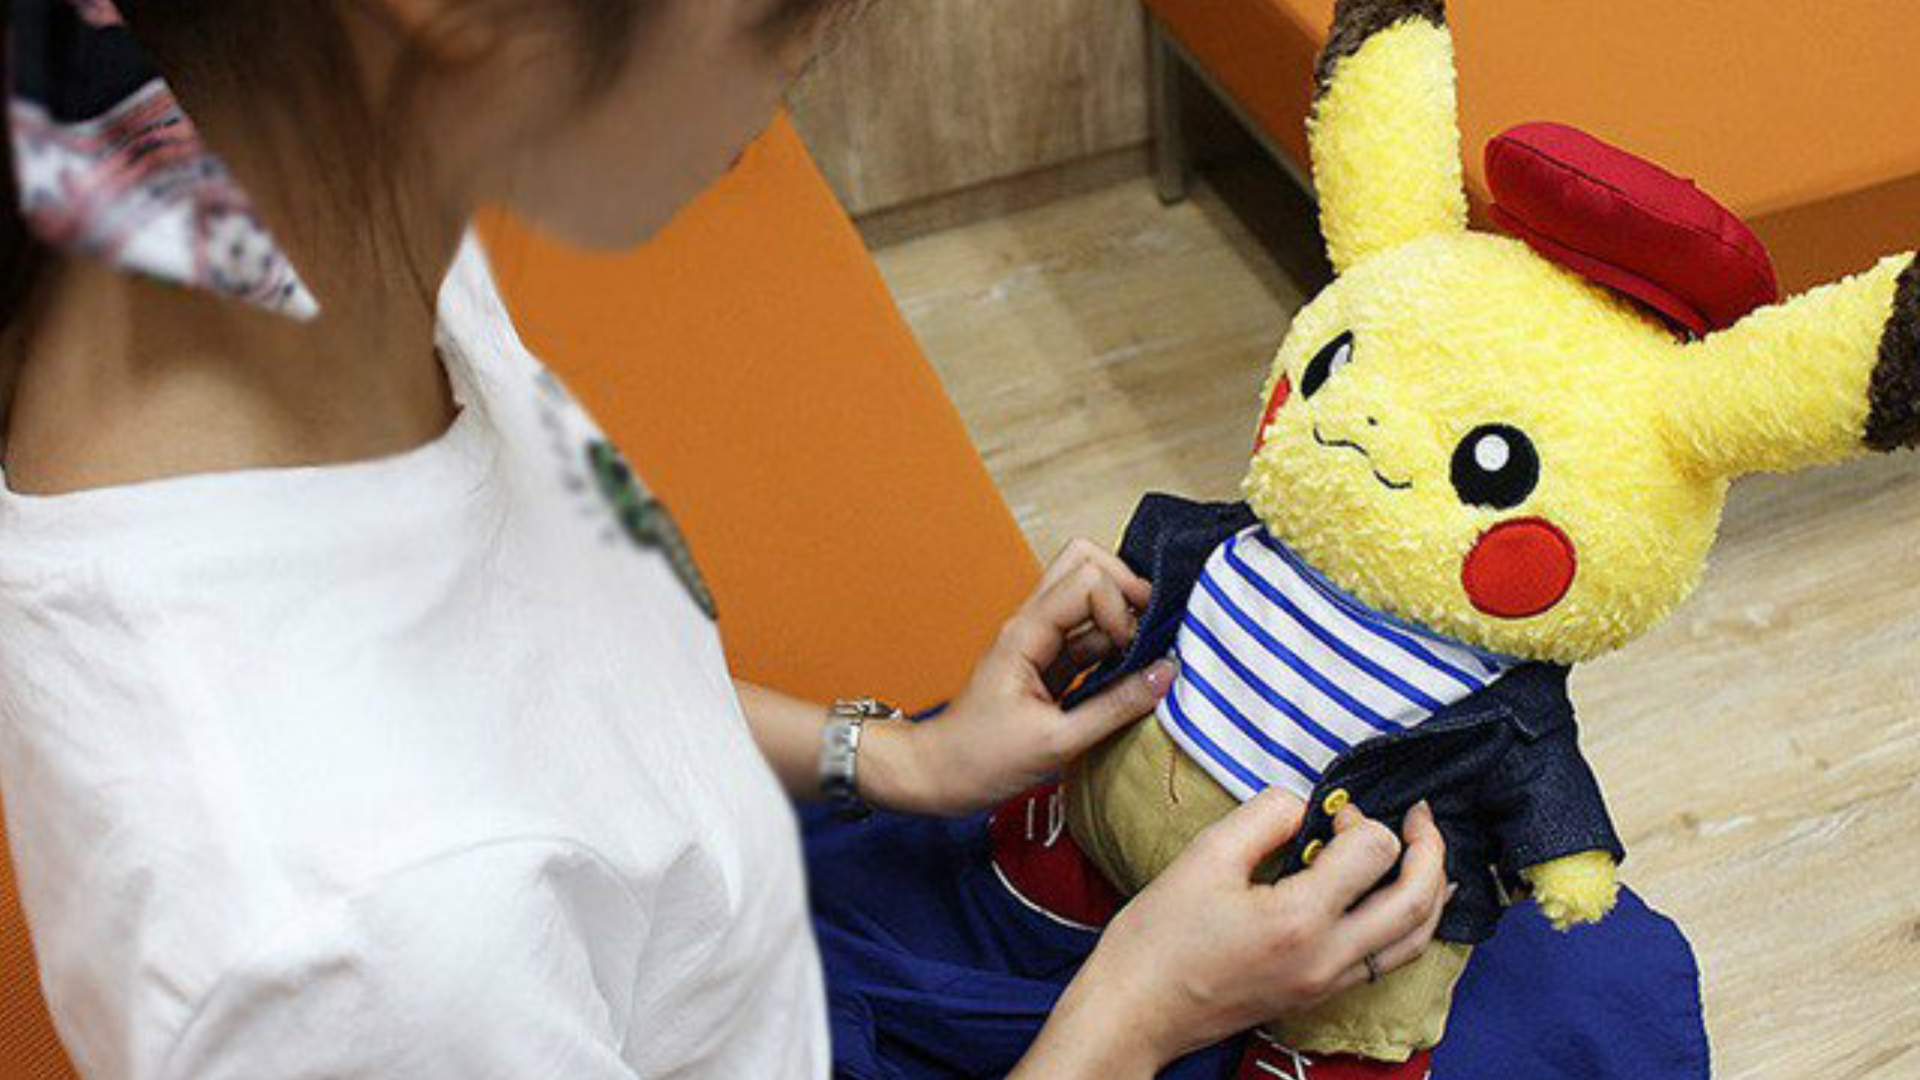 Echad un vistazo a este genial peluche de Pikachu con ropa de Pokémon Center